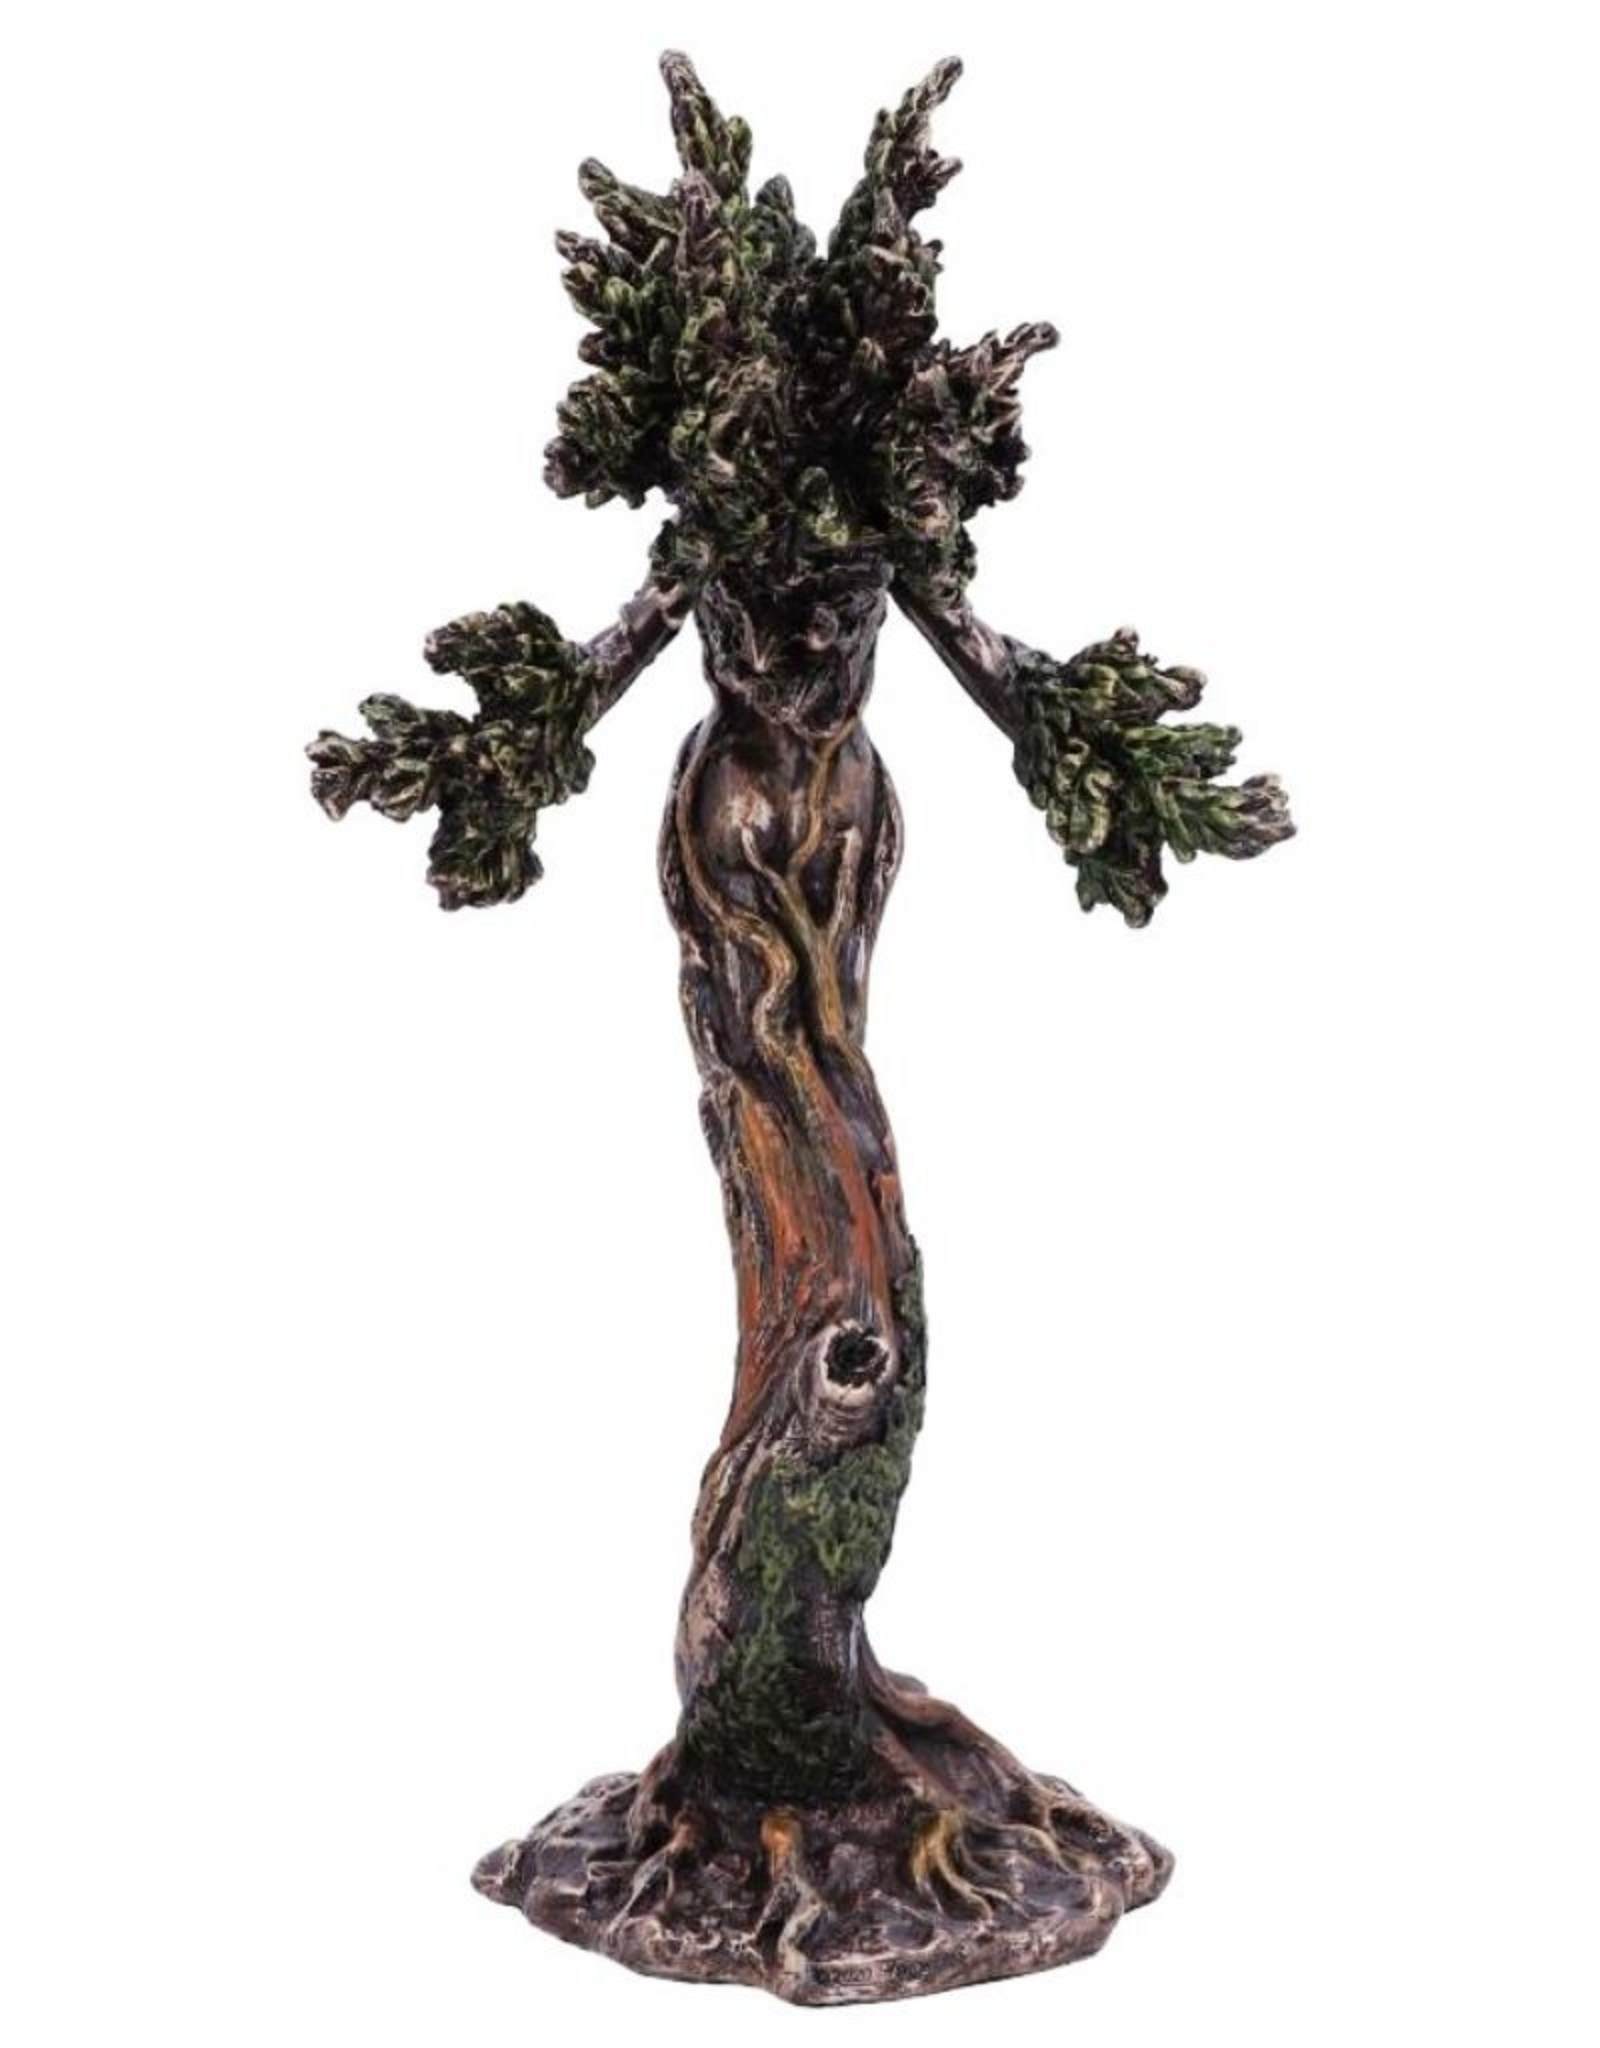 Veronese Design Giftware & Lifestyle - Mythological Forest Nymph Figurine Bronzed 25cm